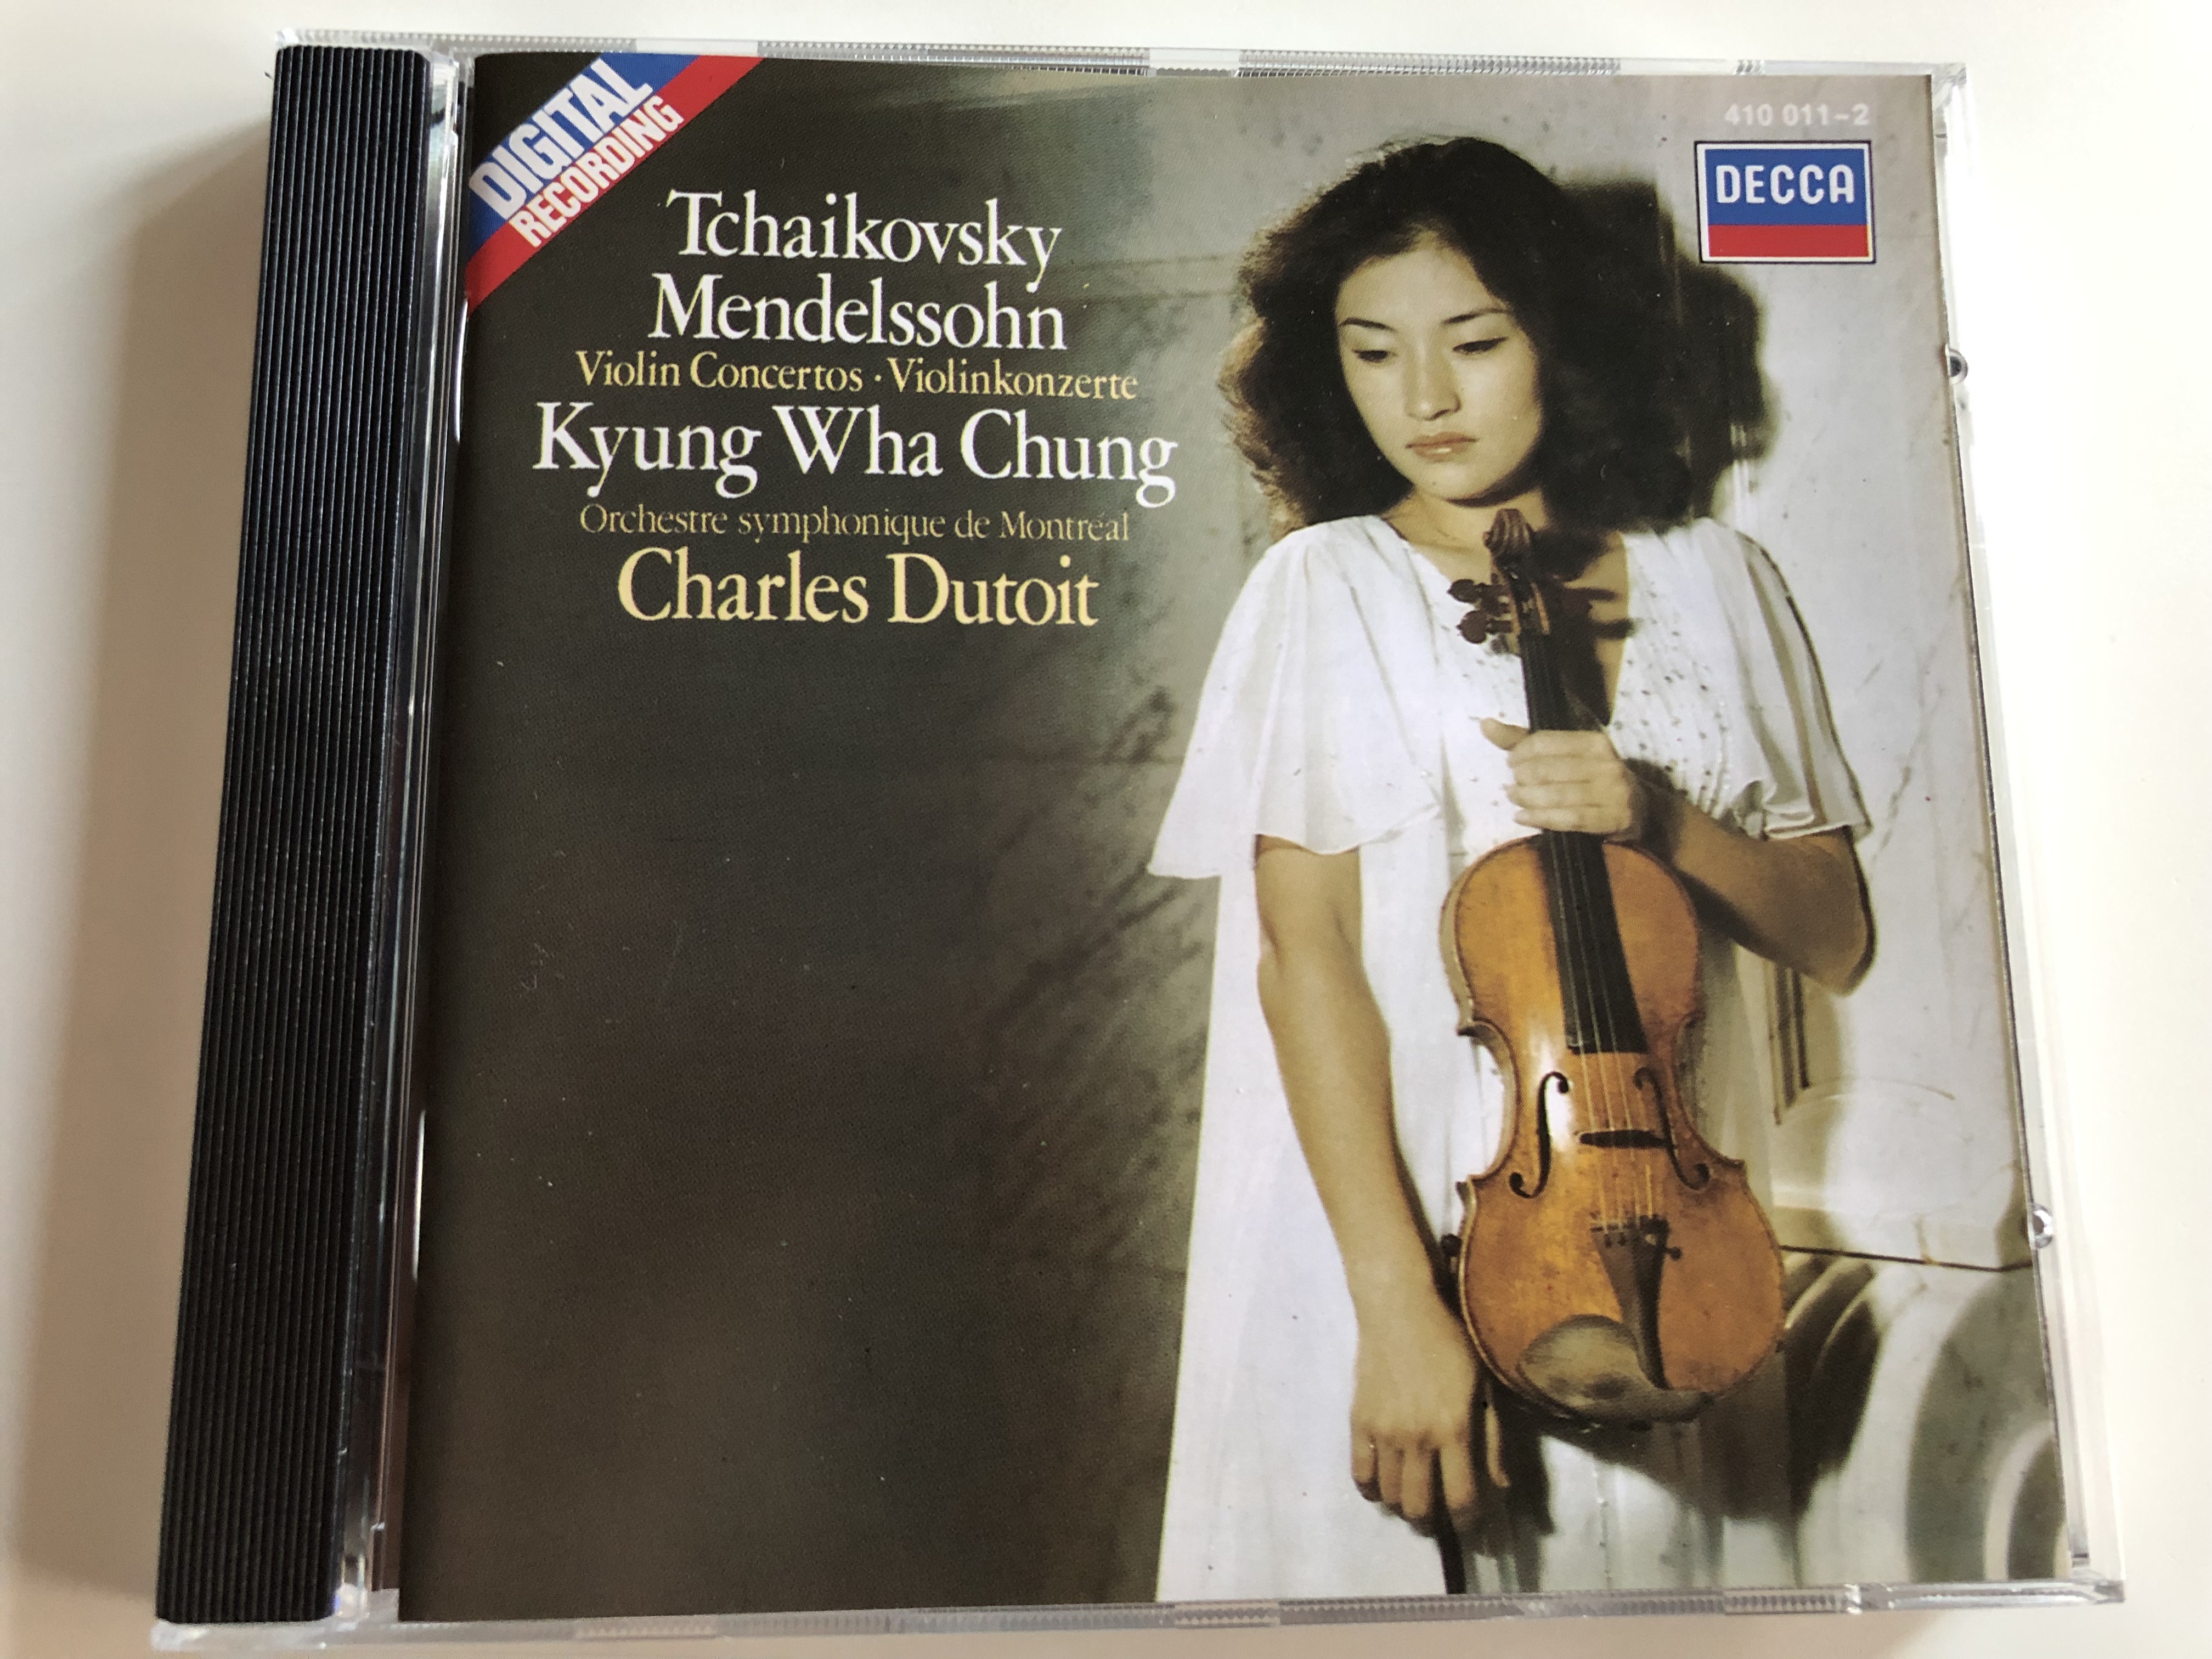 tchaikovsky-mendelssohn-violin-concertos-kyung-wha-chung-orchestre-symphonique-de-montr-al-charles-dutoit-decca-audio-cd-1983-stereo-410-011-2-1-.jpg